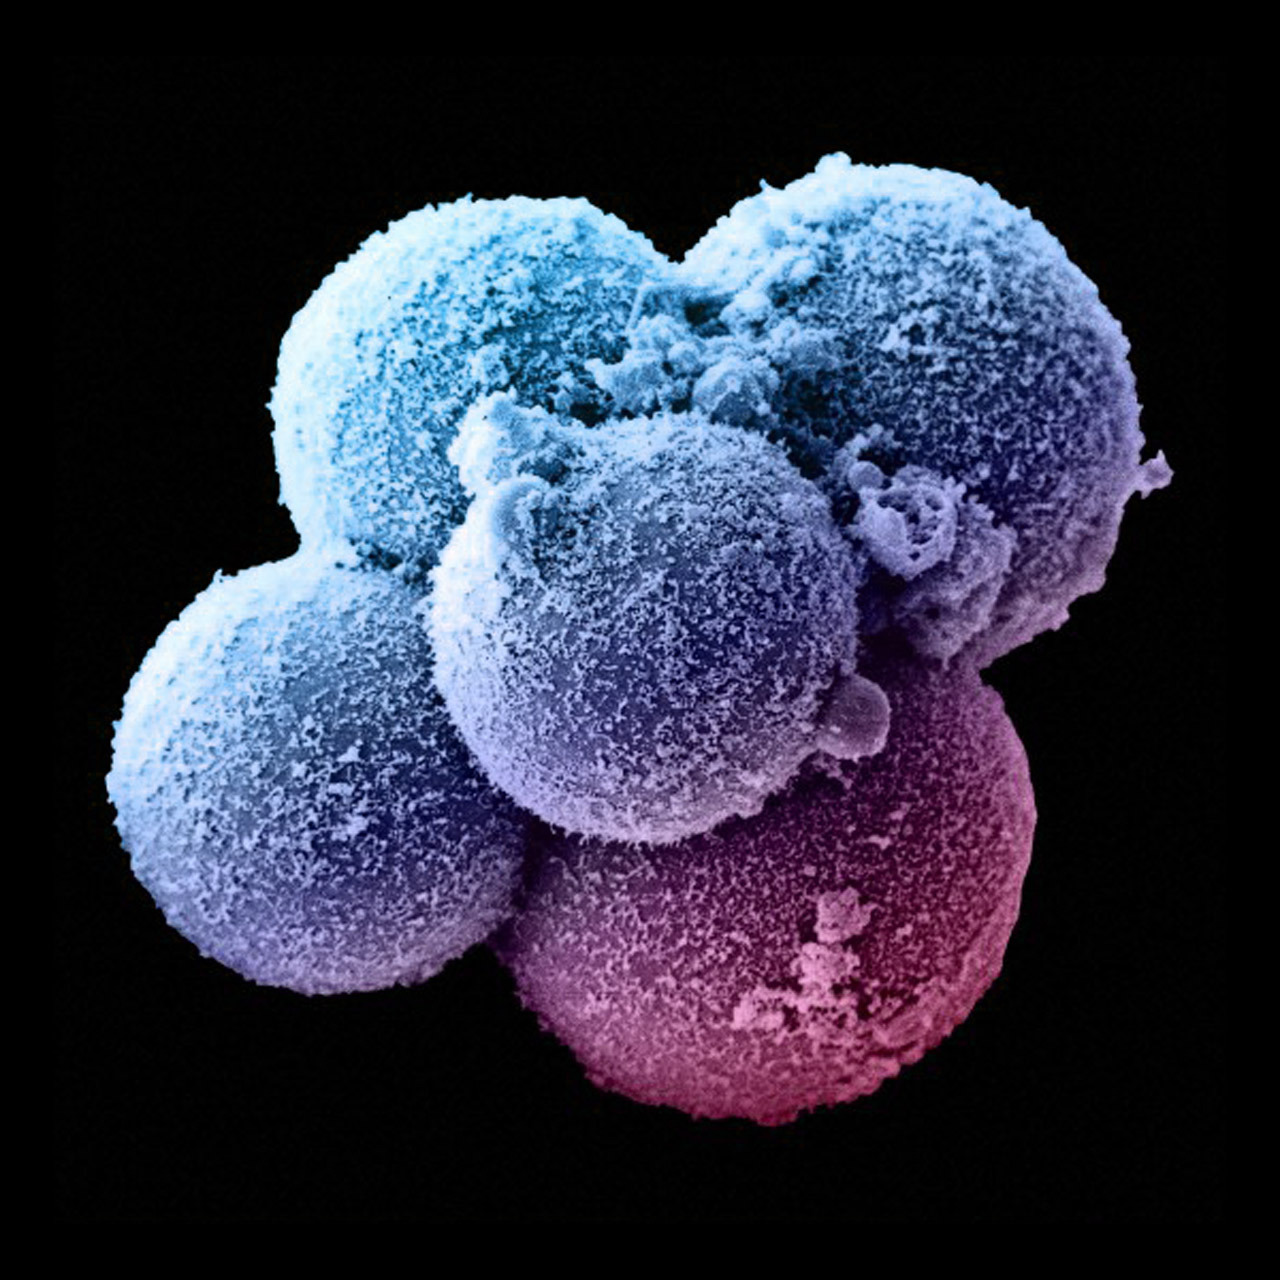 infinity-imagined: âA human zygote in the 8 cell stage. â